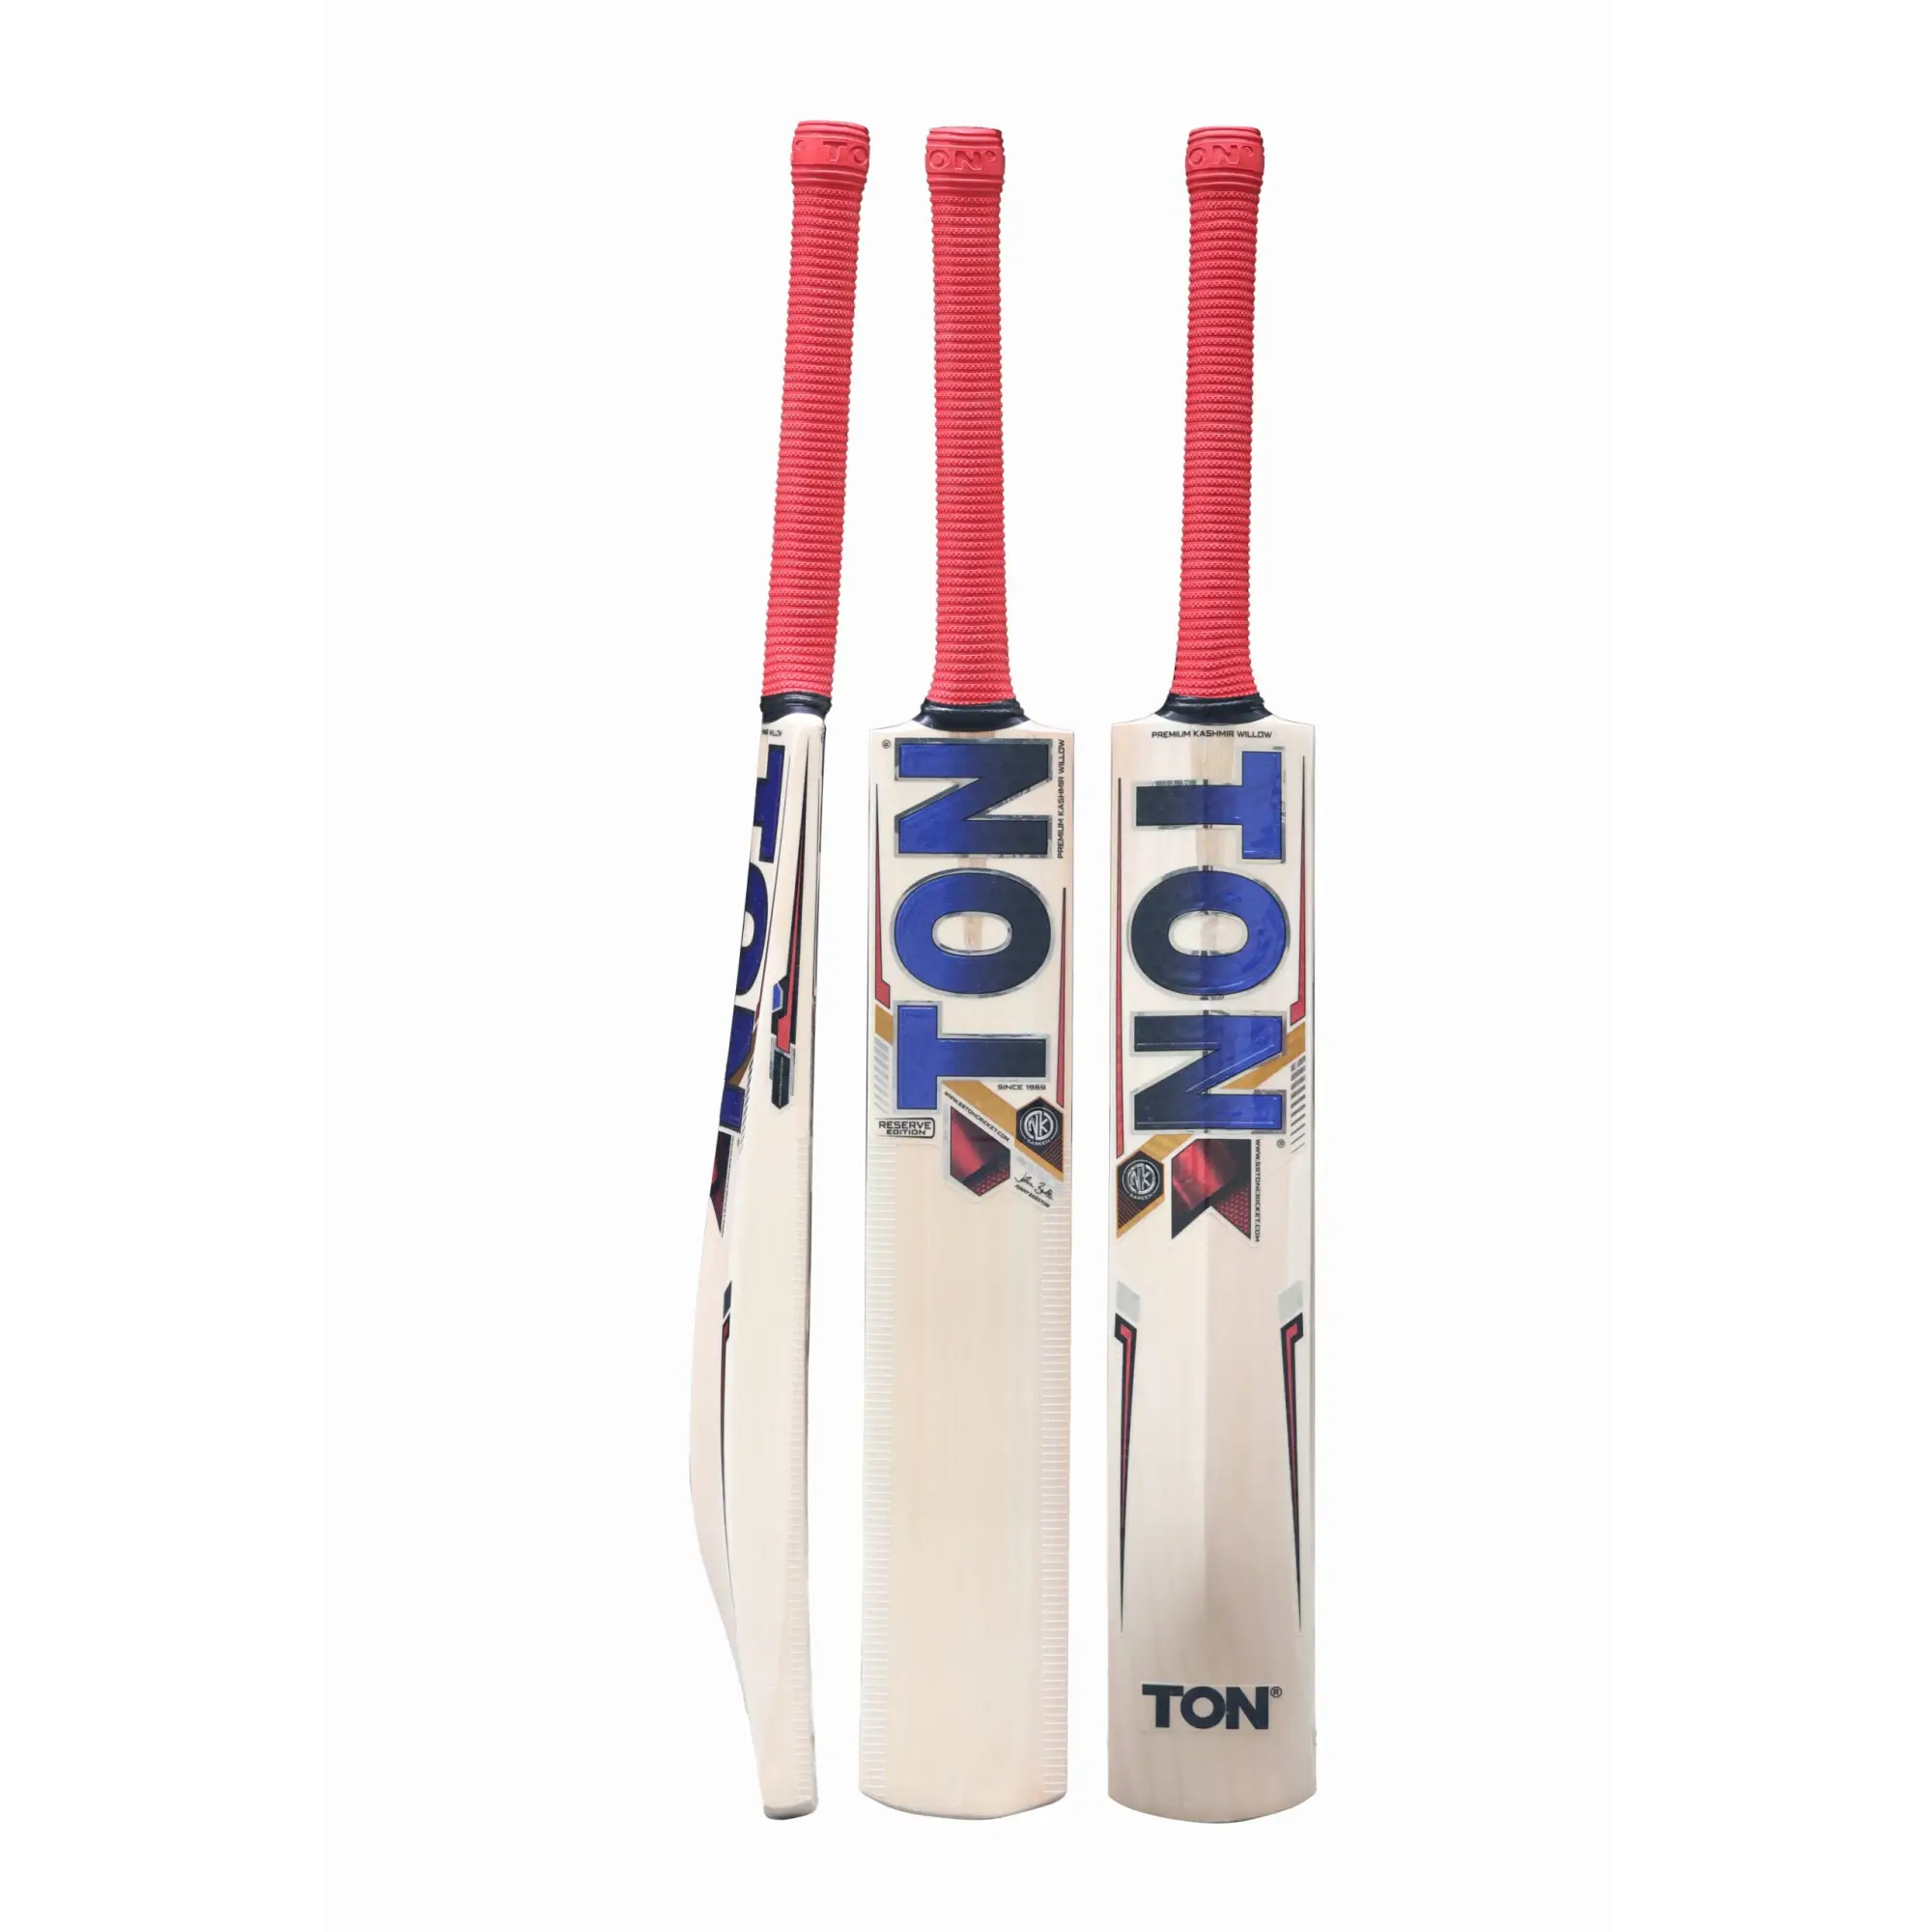 TON Reserve Edition Kashmir Willow Cricket Bat - Size 6 (11-13 Years Old) - BATS - MENS KASHMIR WILLOW